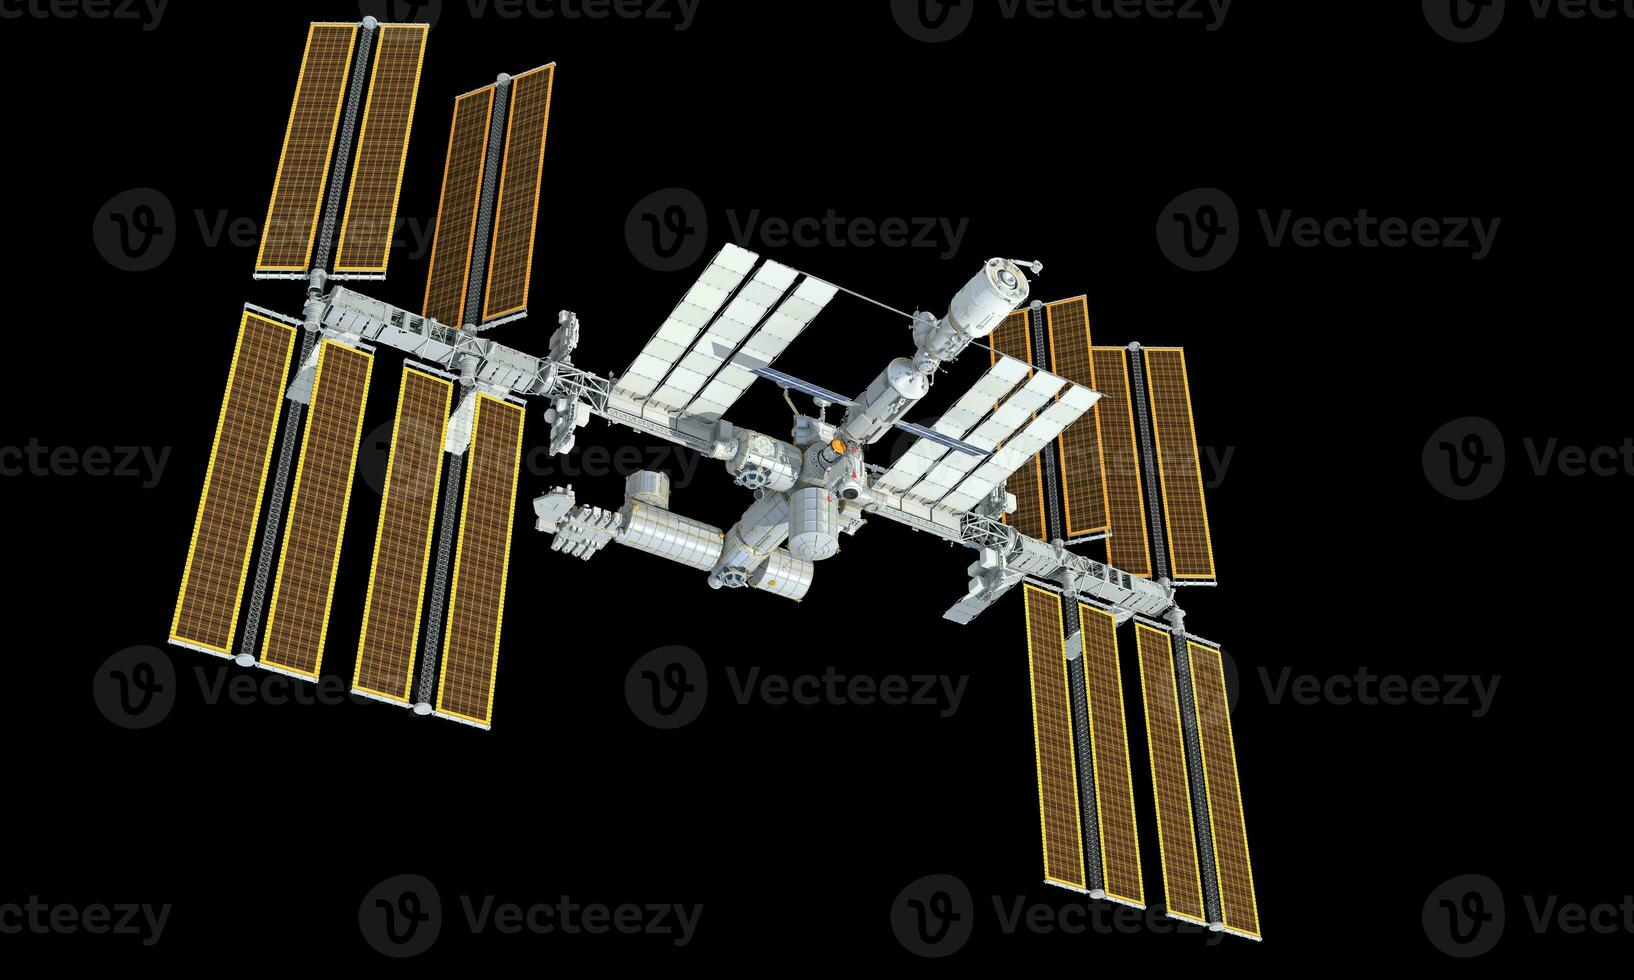 Internationale ruimte station iss 3d renderen Aan zwart achtergrond foto